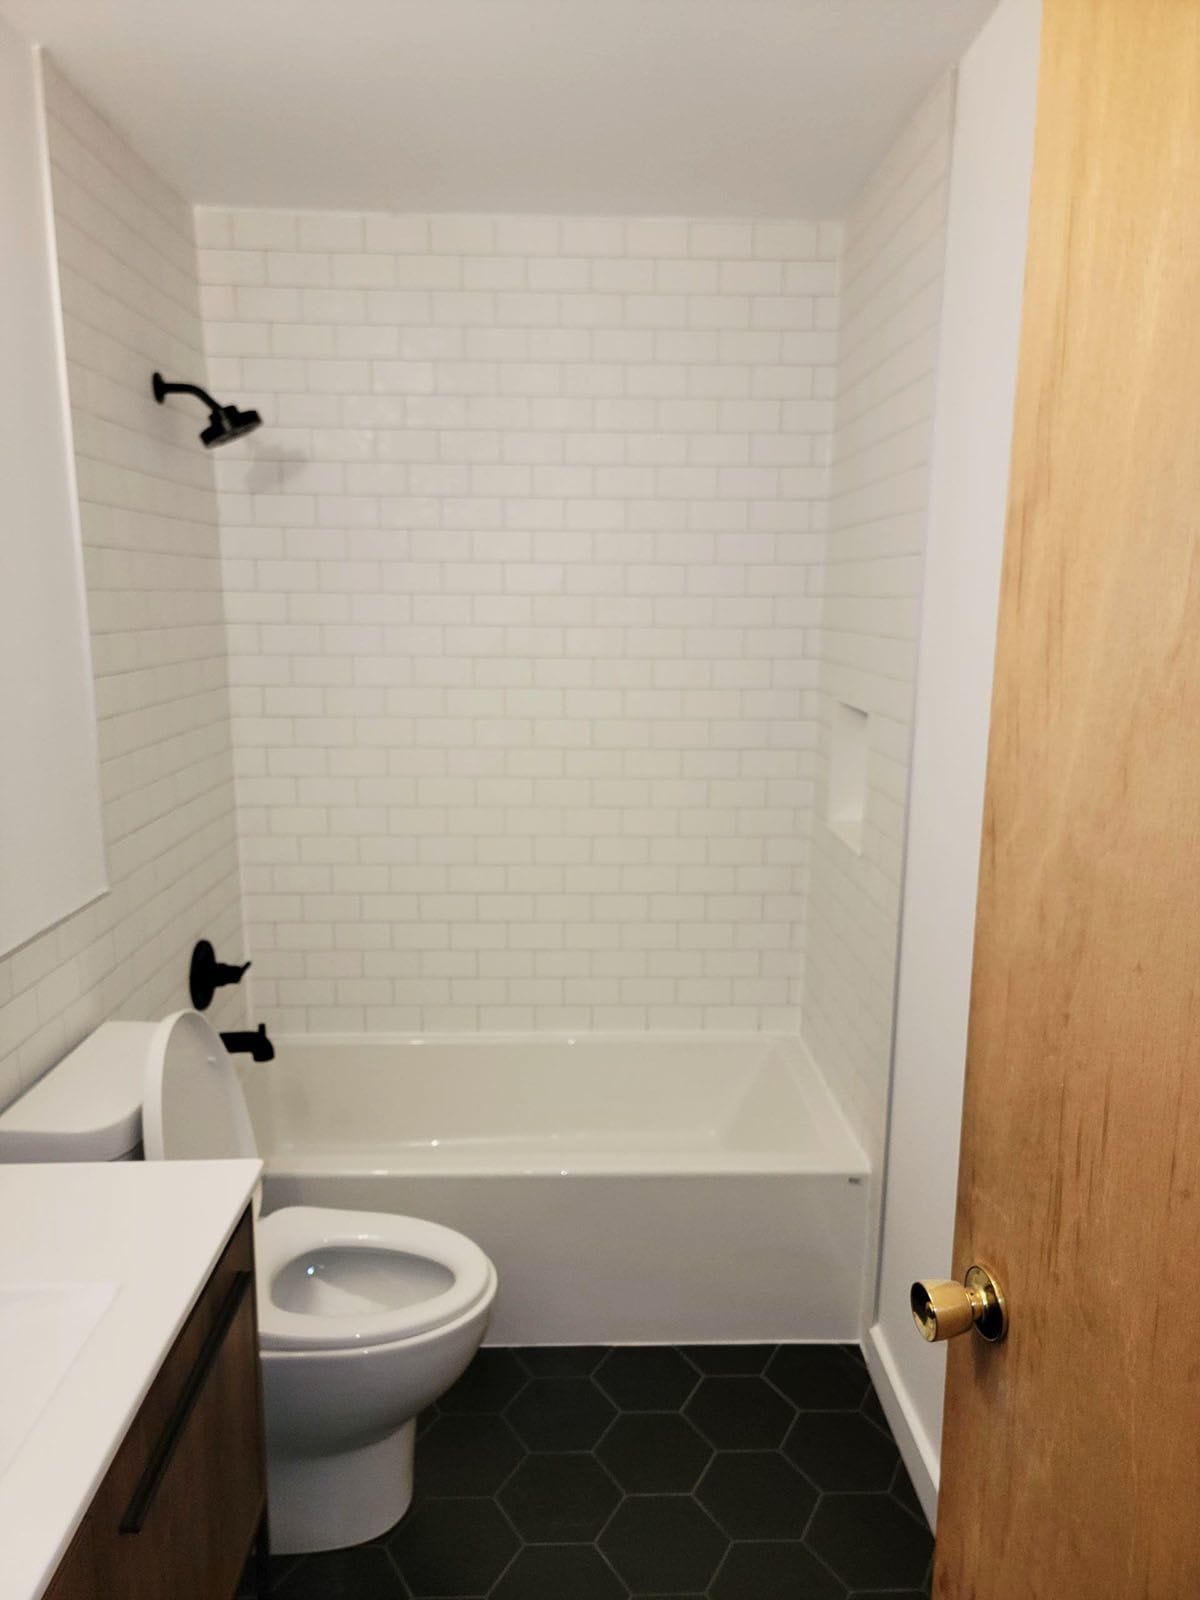 Bathtub, Toiler Bowl and Shower